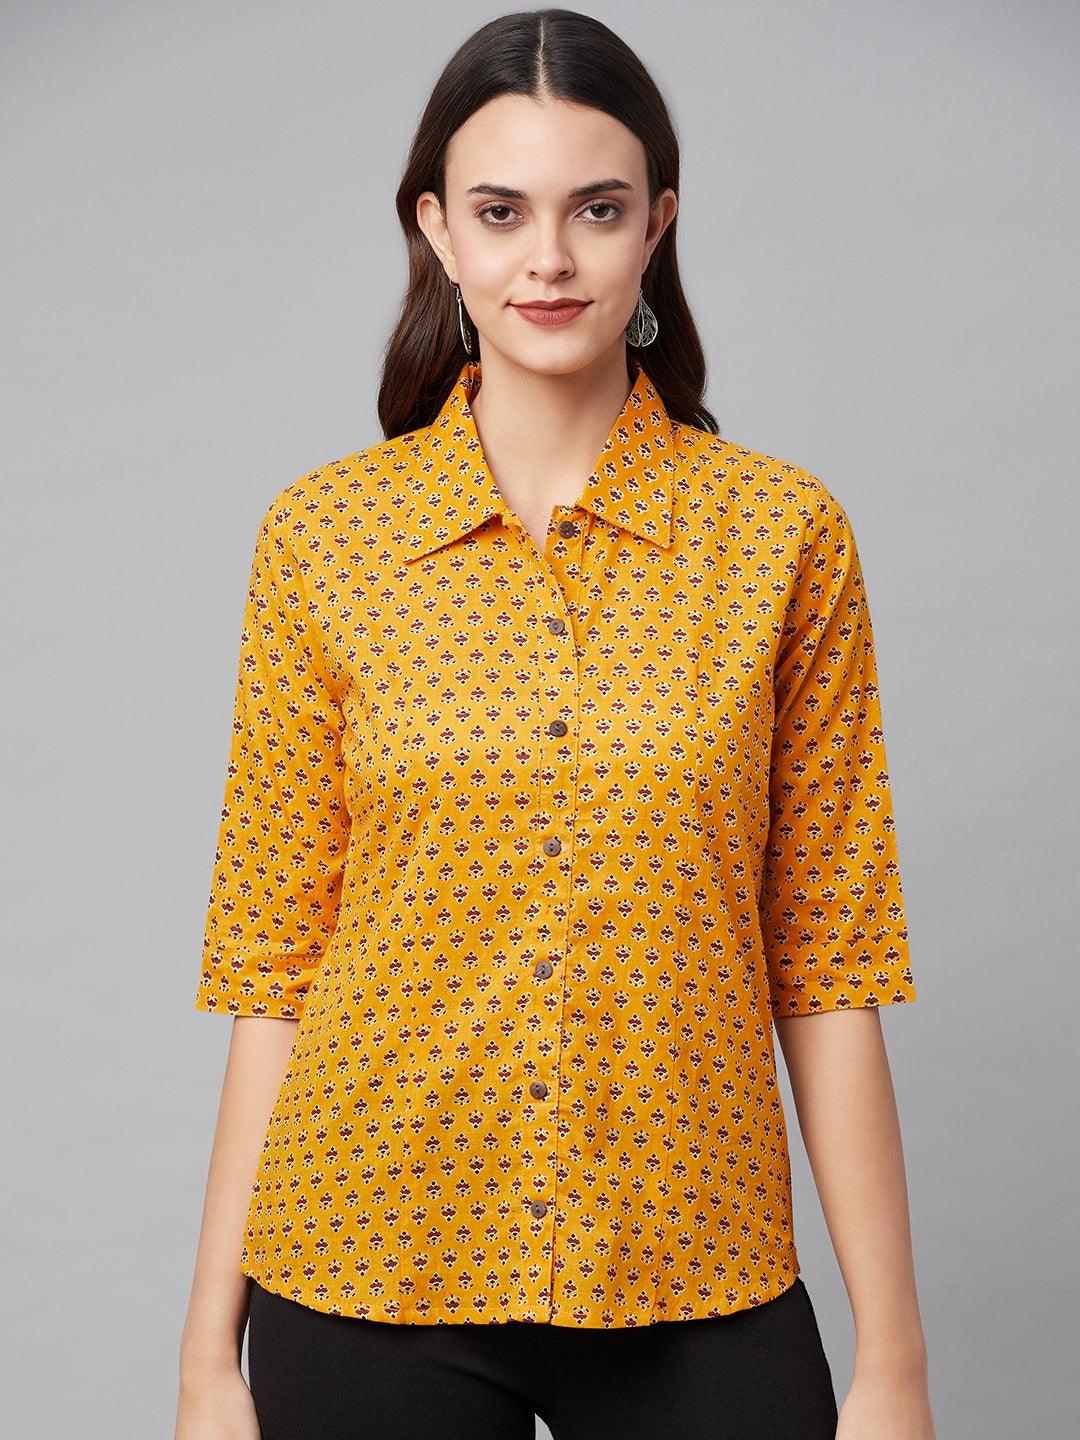 Divena Yellow Block Printed Casual Women Shirts - divena world